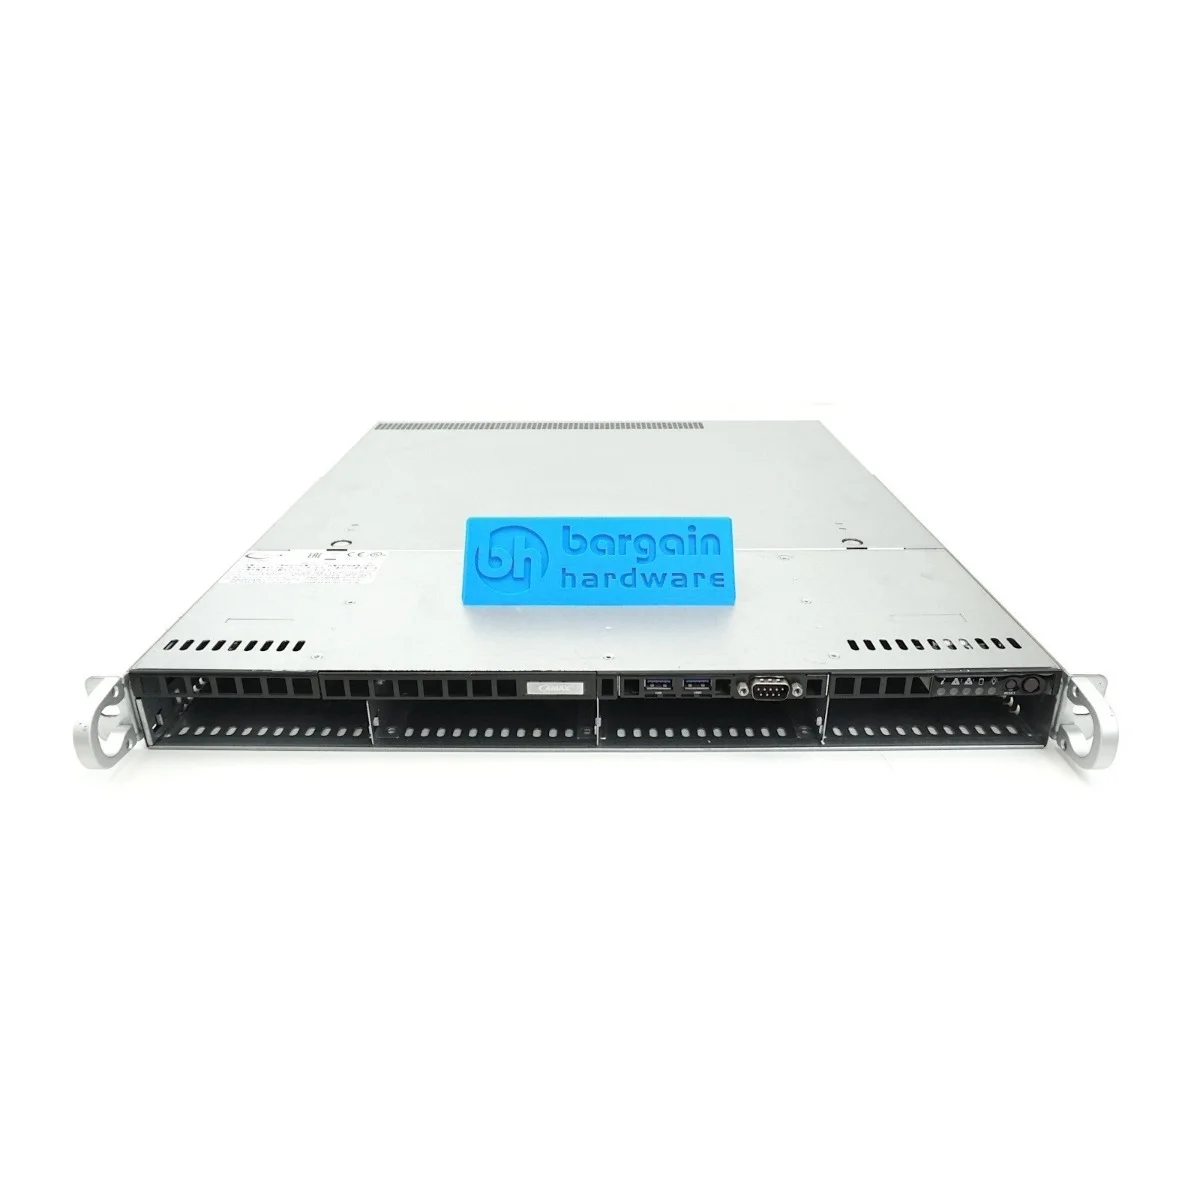 SuperMicro CSE-813 X9DRD-iF 1U Rack Server